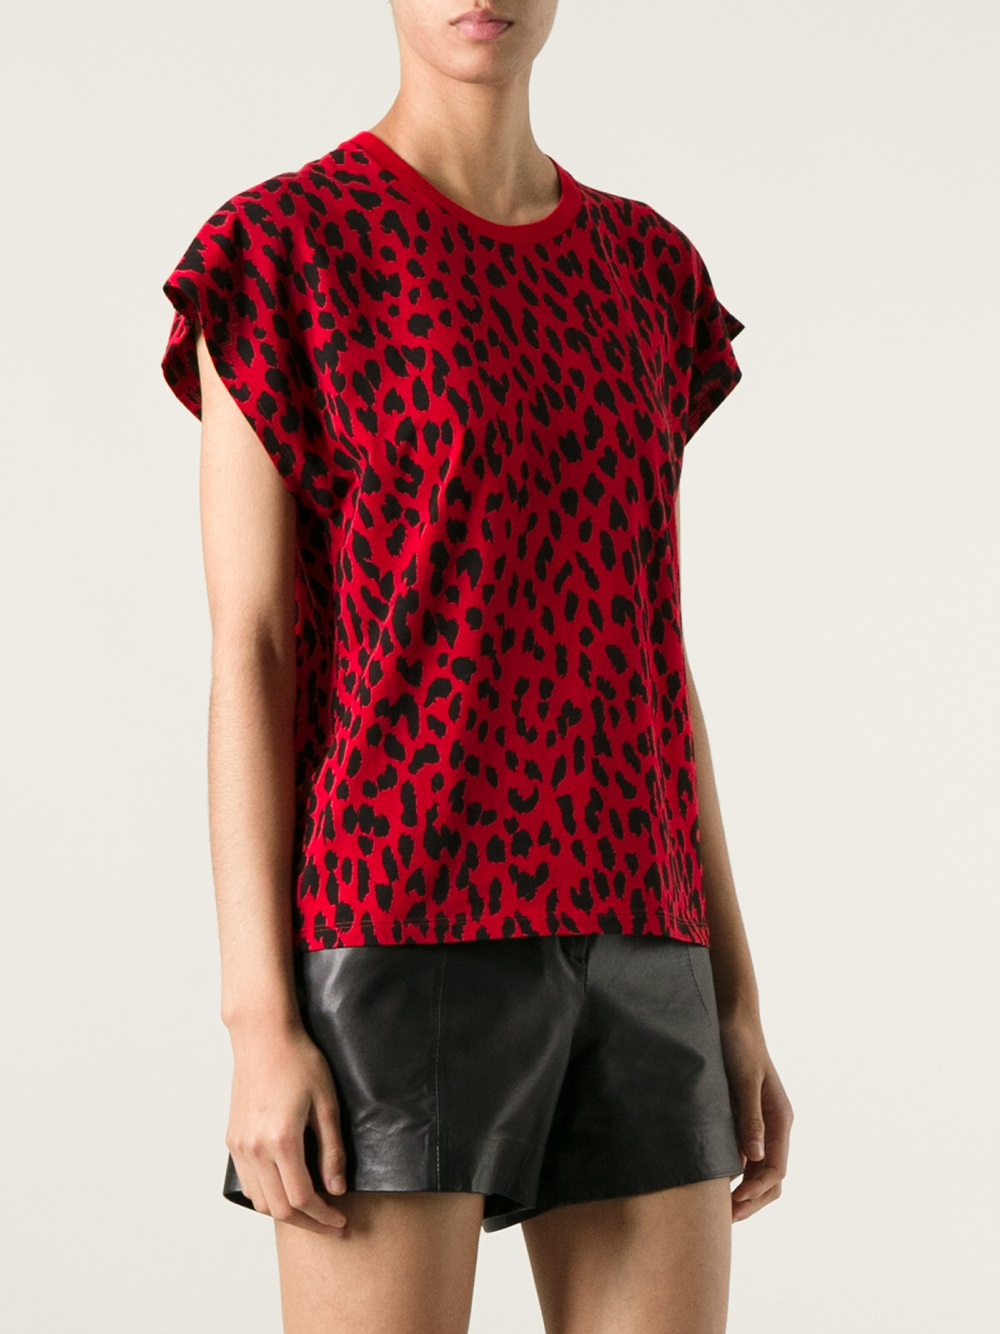 Lyst - Saint Laurent Leopard Print T-Shirt in Red